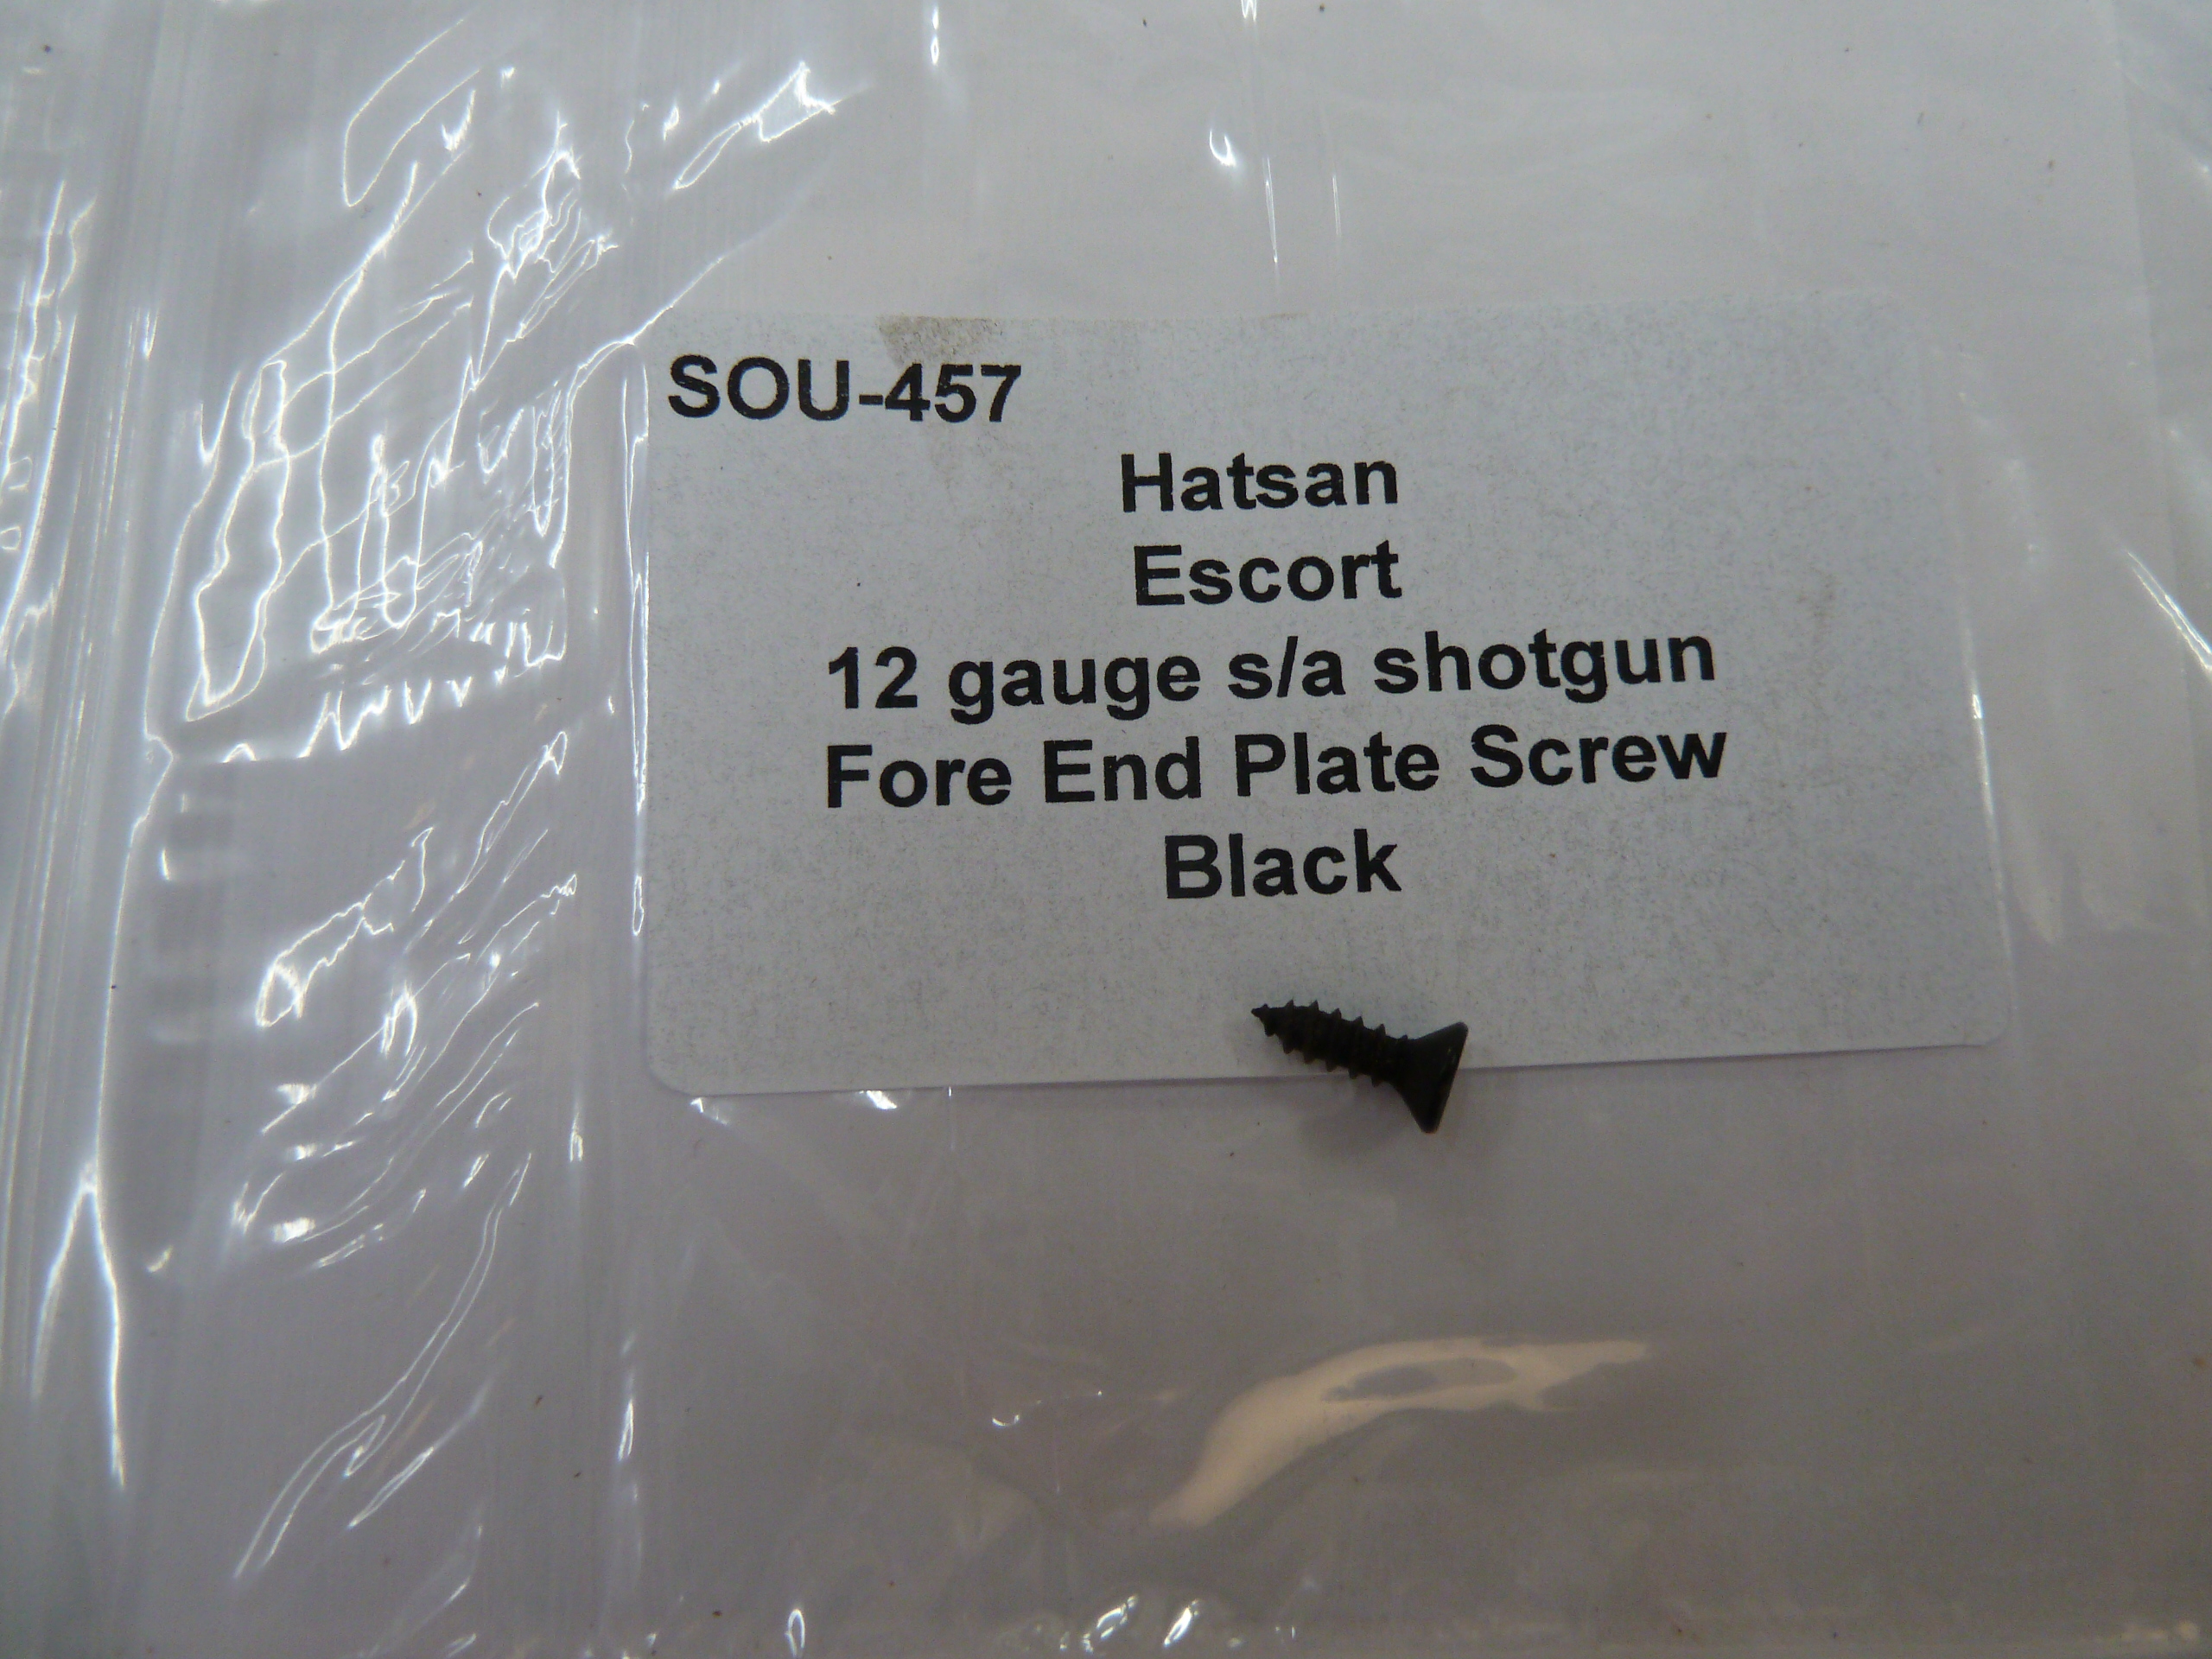 Hatsan Escort 12 gauge forend plate screw